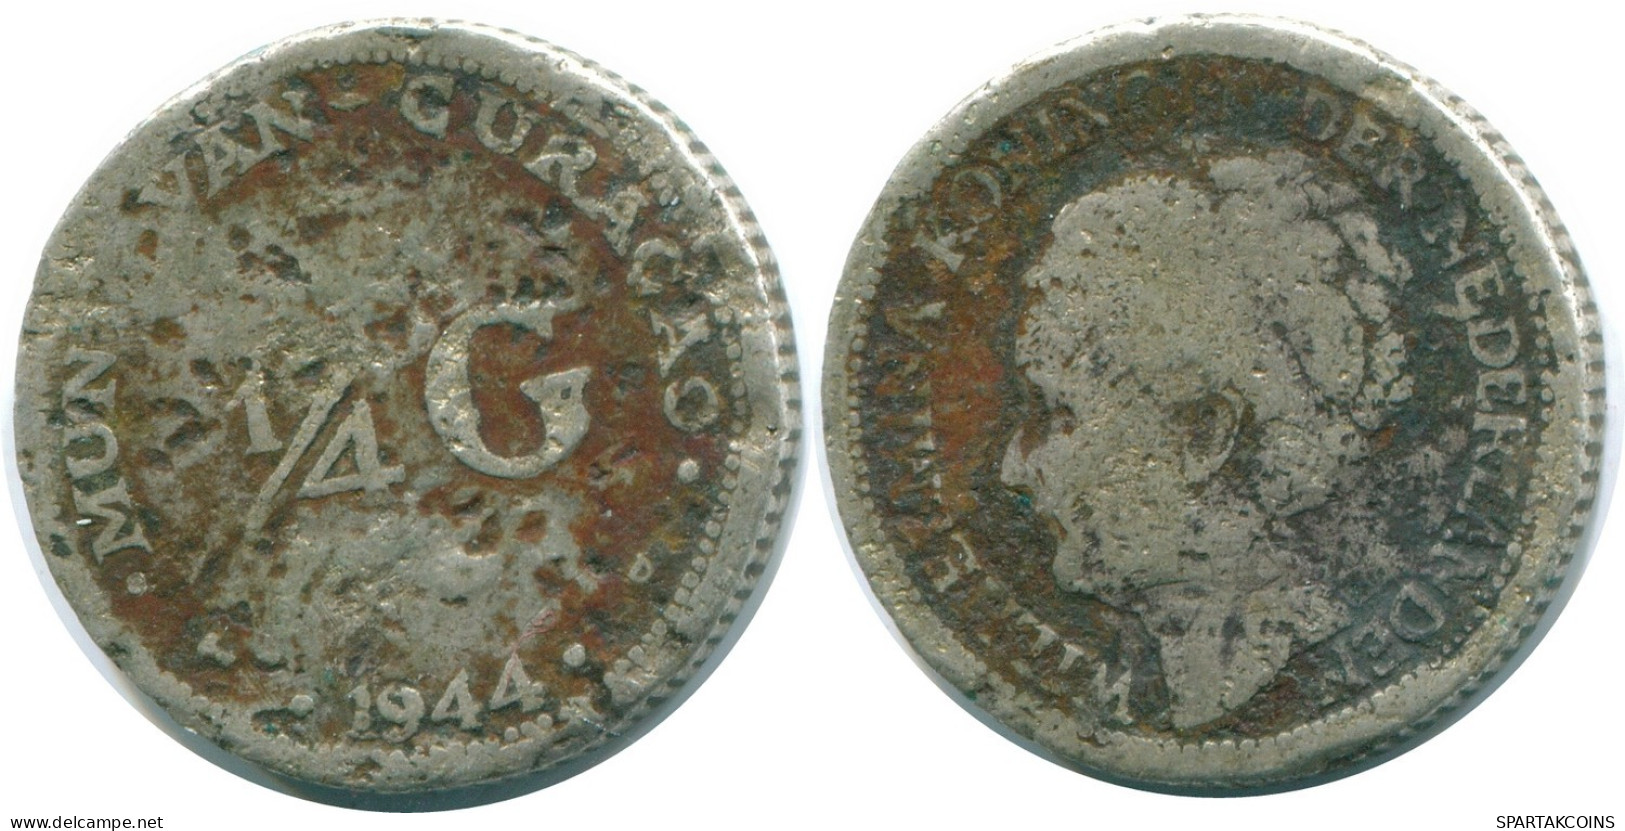 1/4 GULDEN 1944 CURACAO Netherlands SILVER Colonial Coin #NL10673.4.U.A - Curaçao